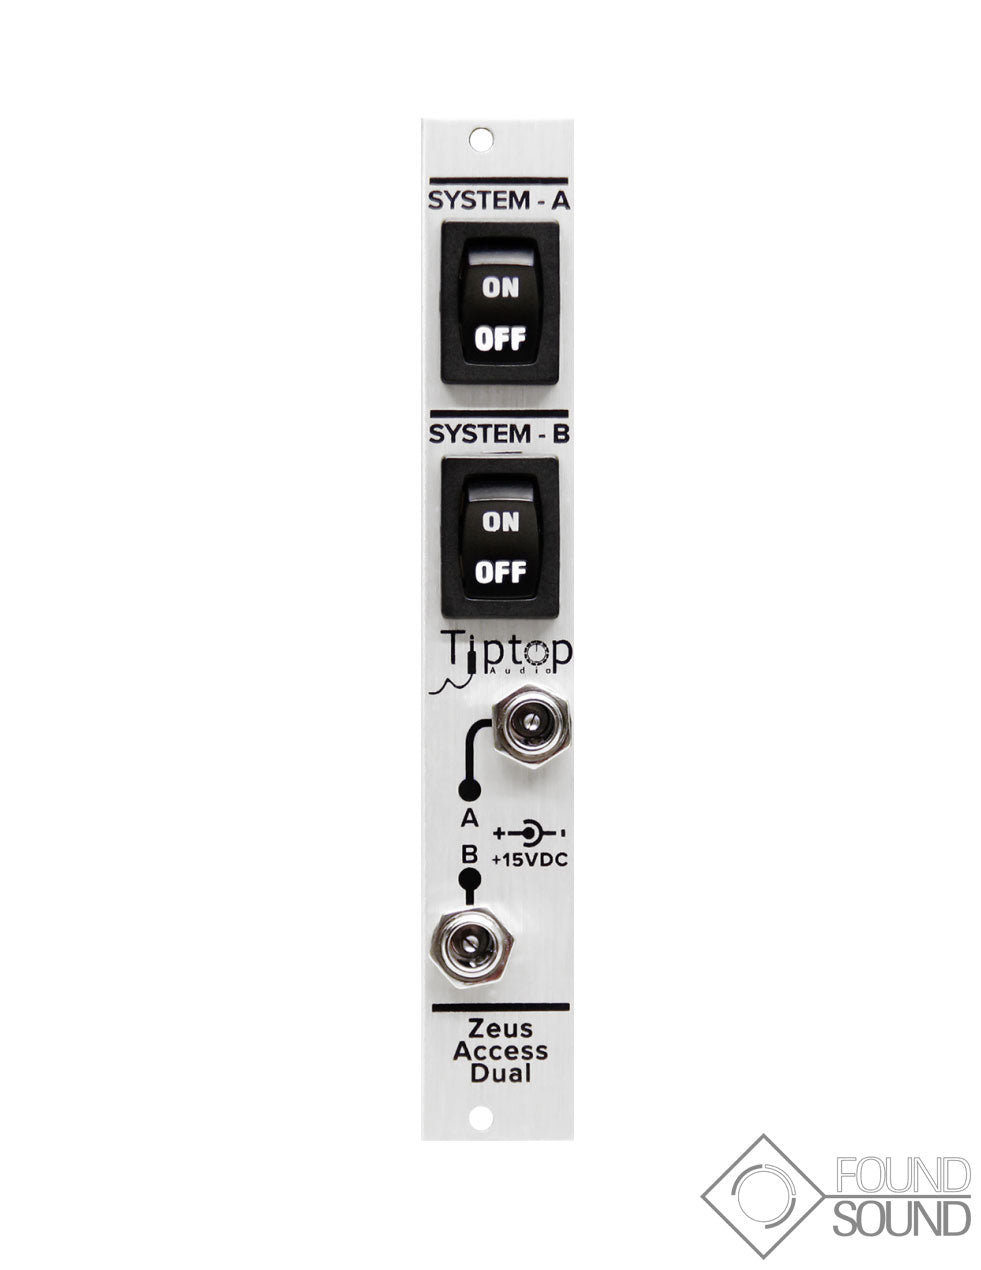 Tiptop Audio Zeus Access Dual